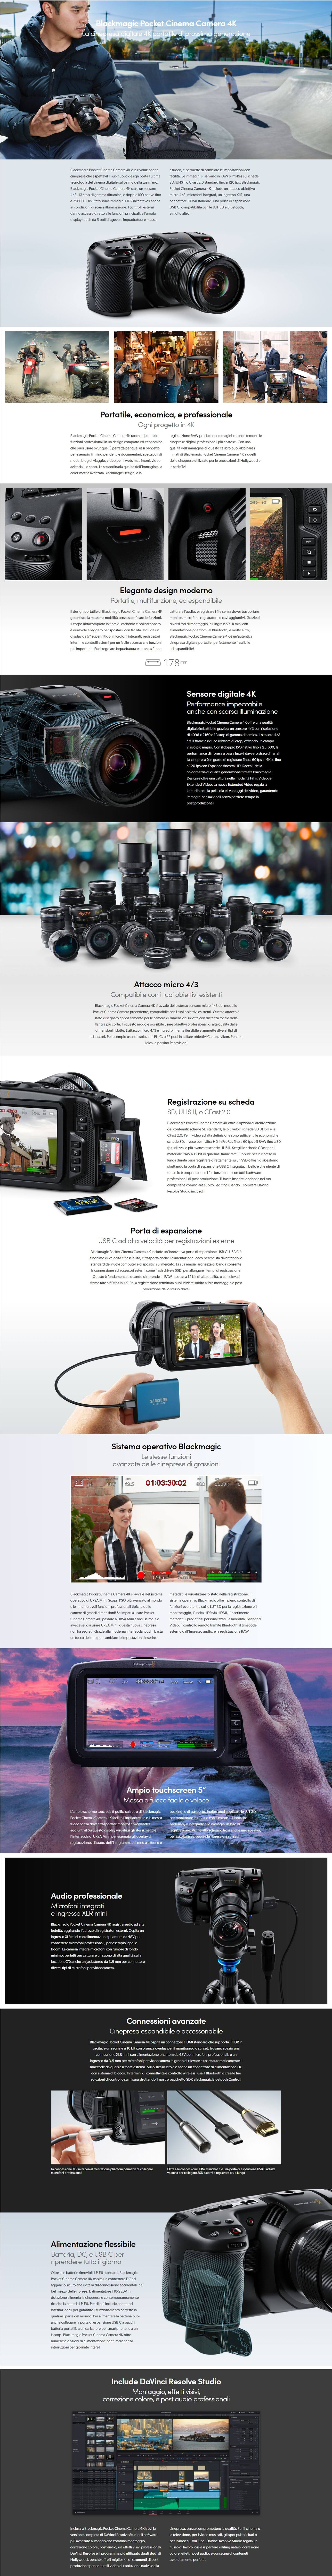 Template Blackmagic Cinema Camera Pocket 4K